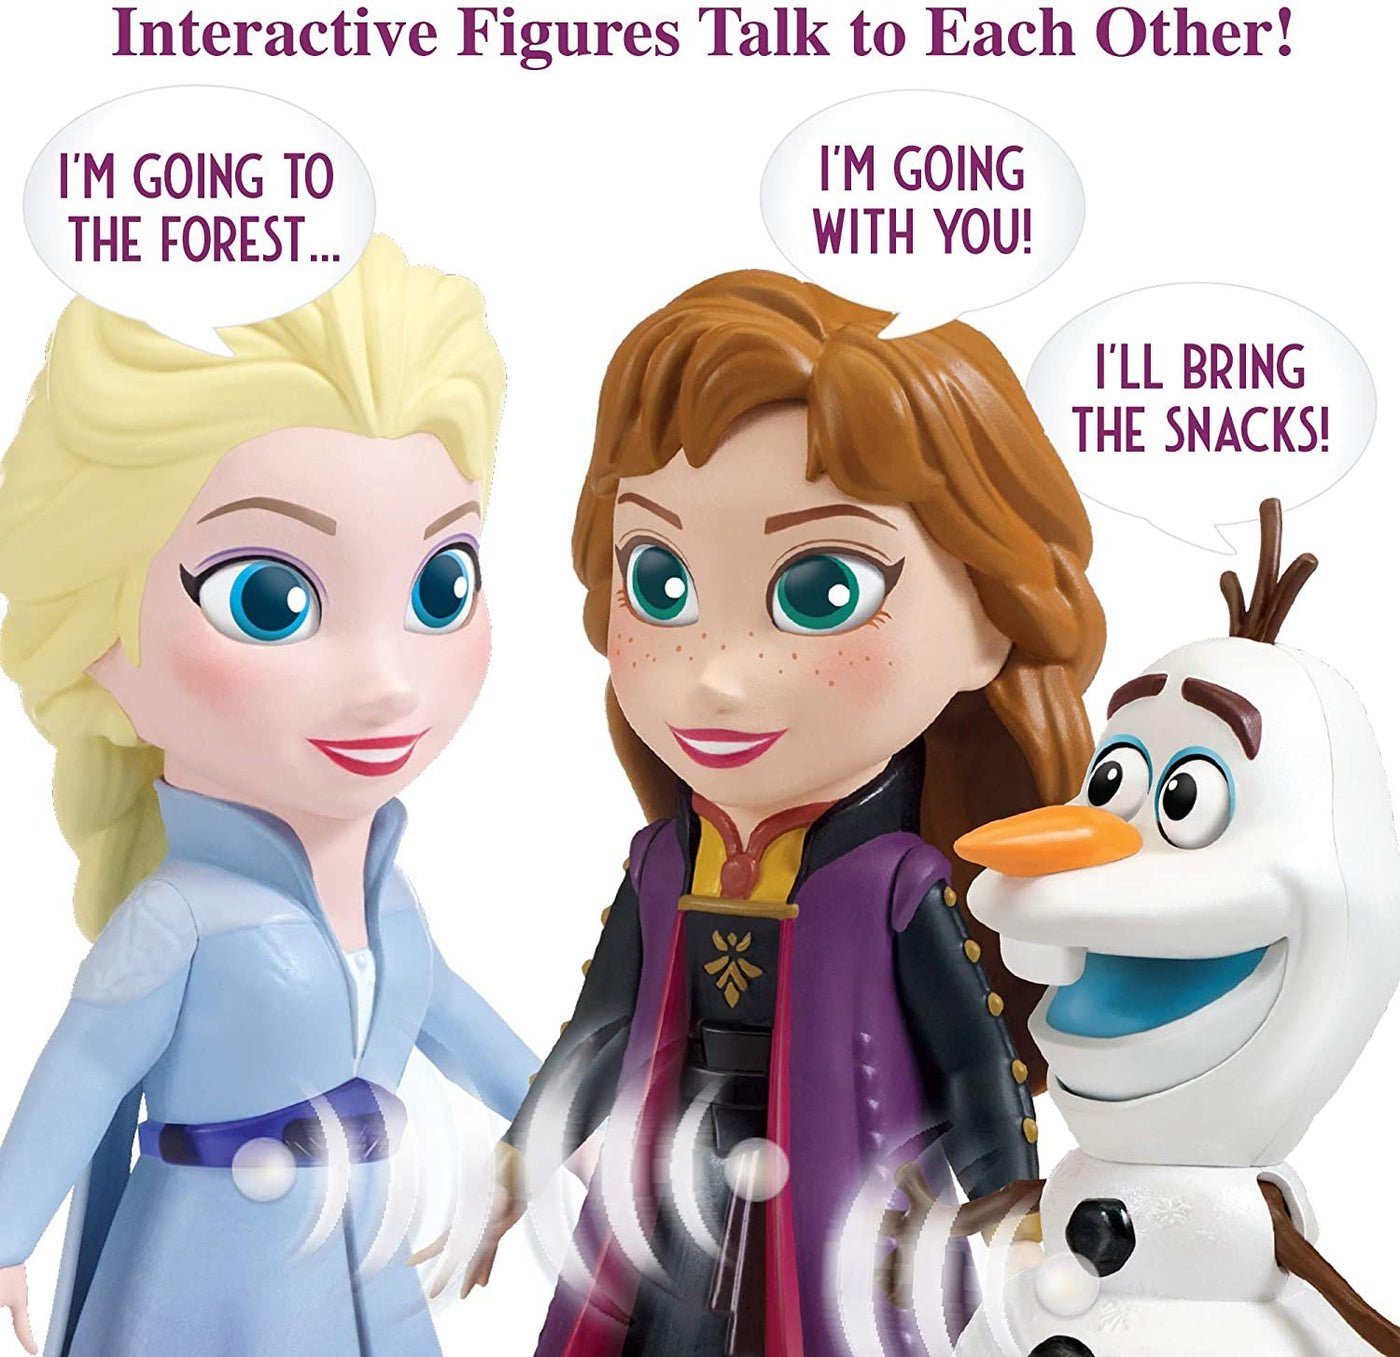 Disney: Frozen 2 Anna Interactive Figure